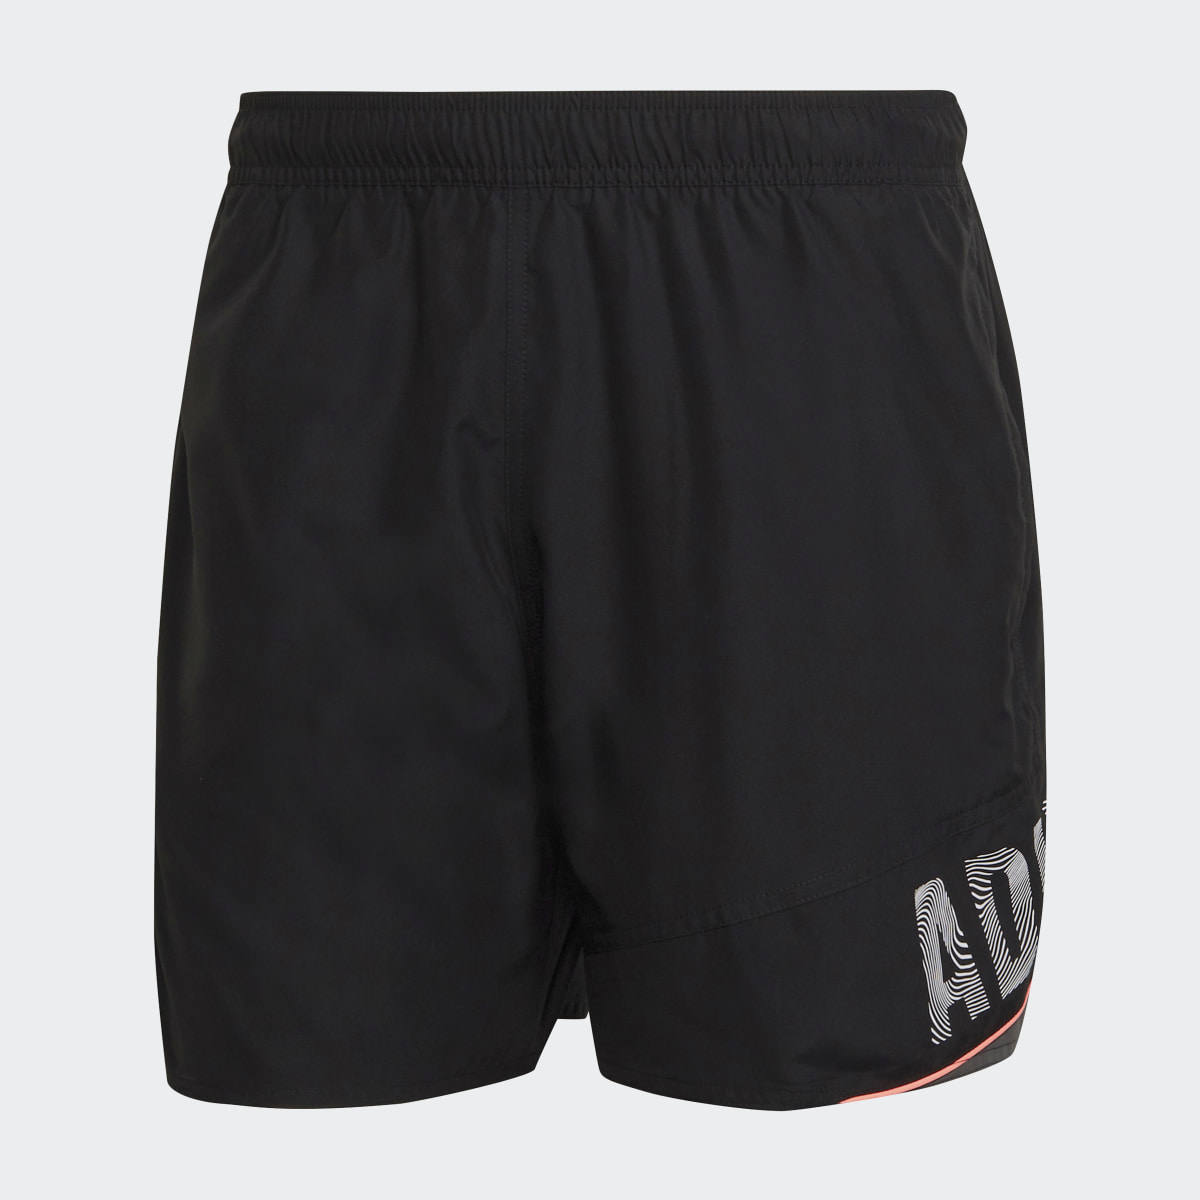 Adidas Wording Swim Shorts. 5